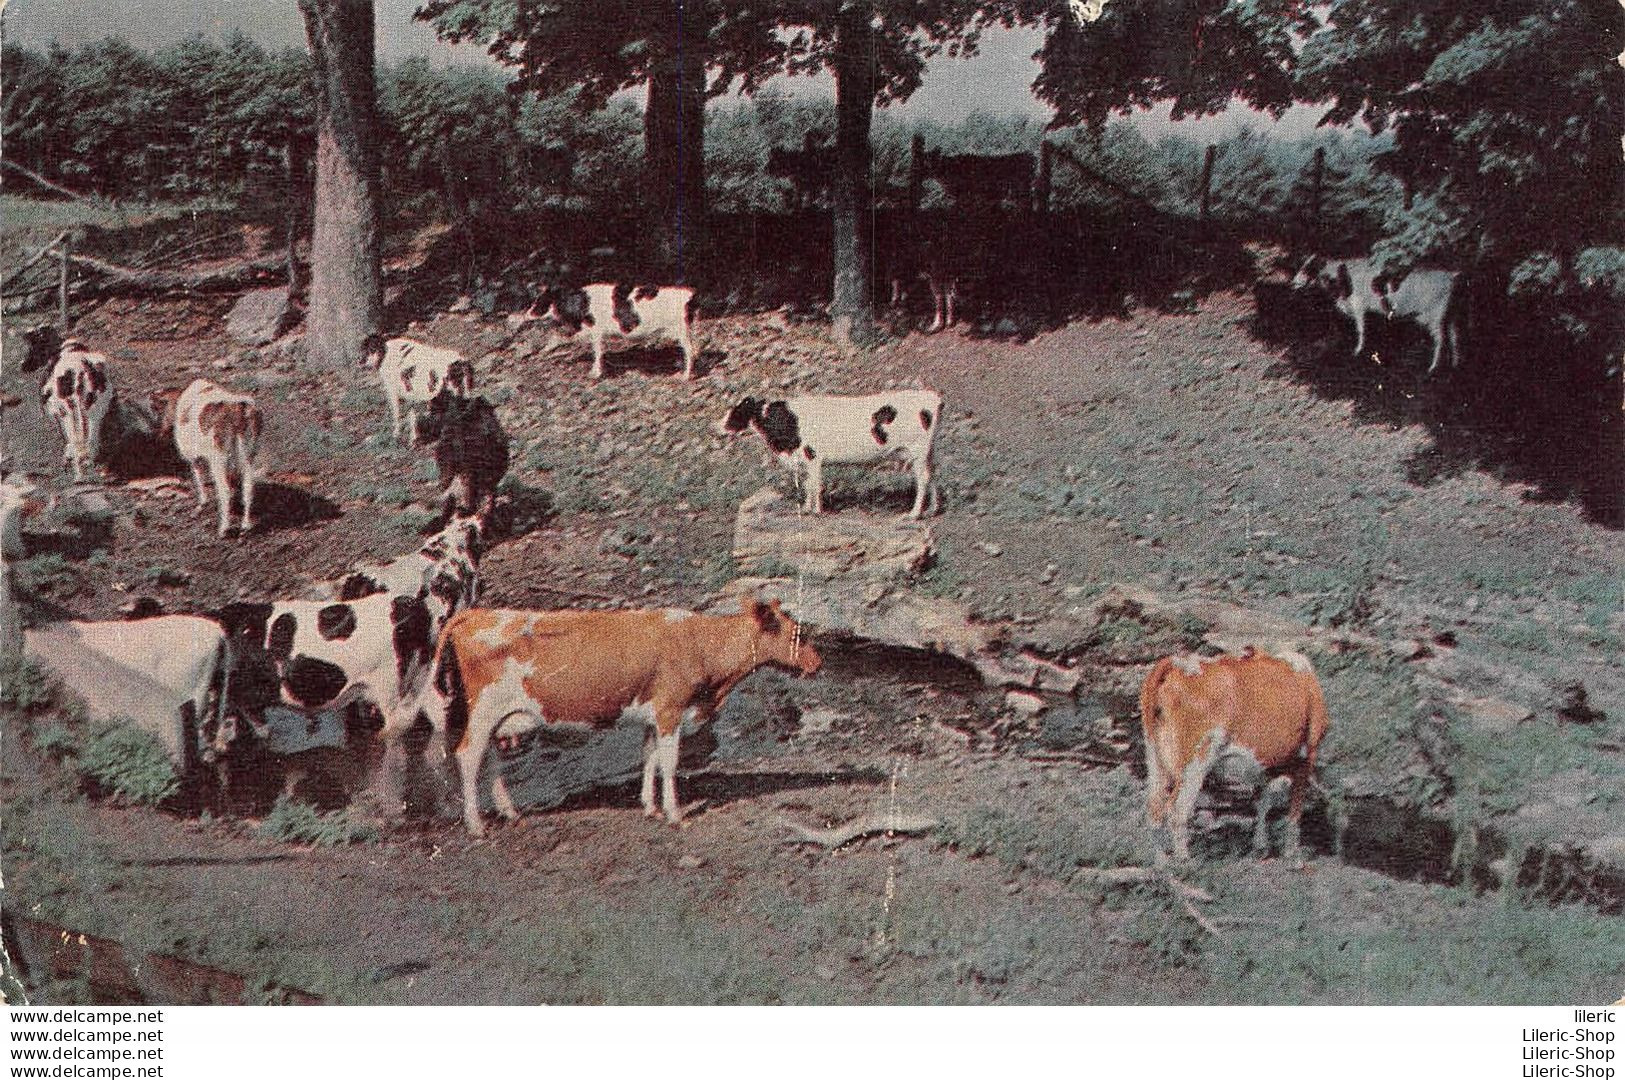 US POSTCARD COWS . A PASTORAL SCENE  - Koeien